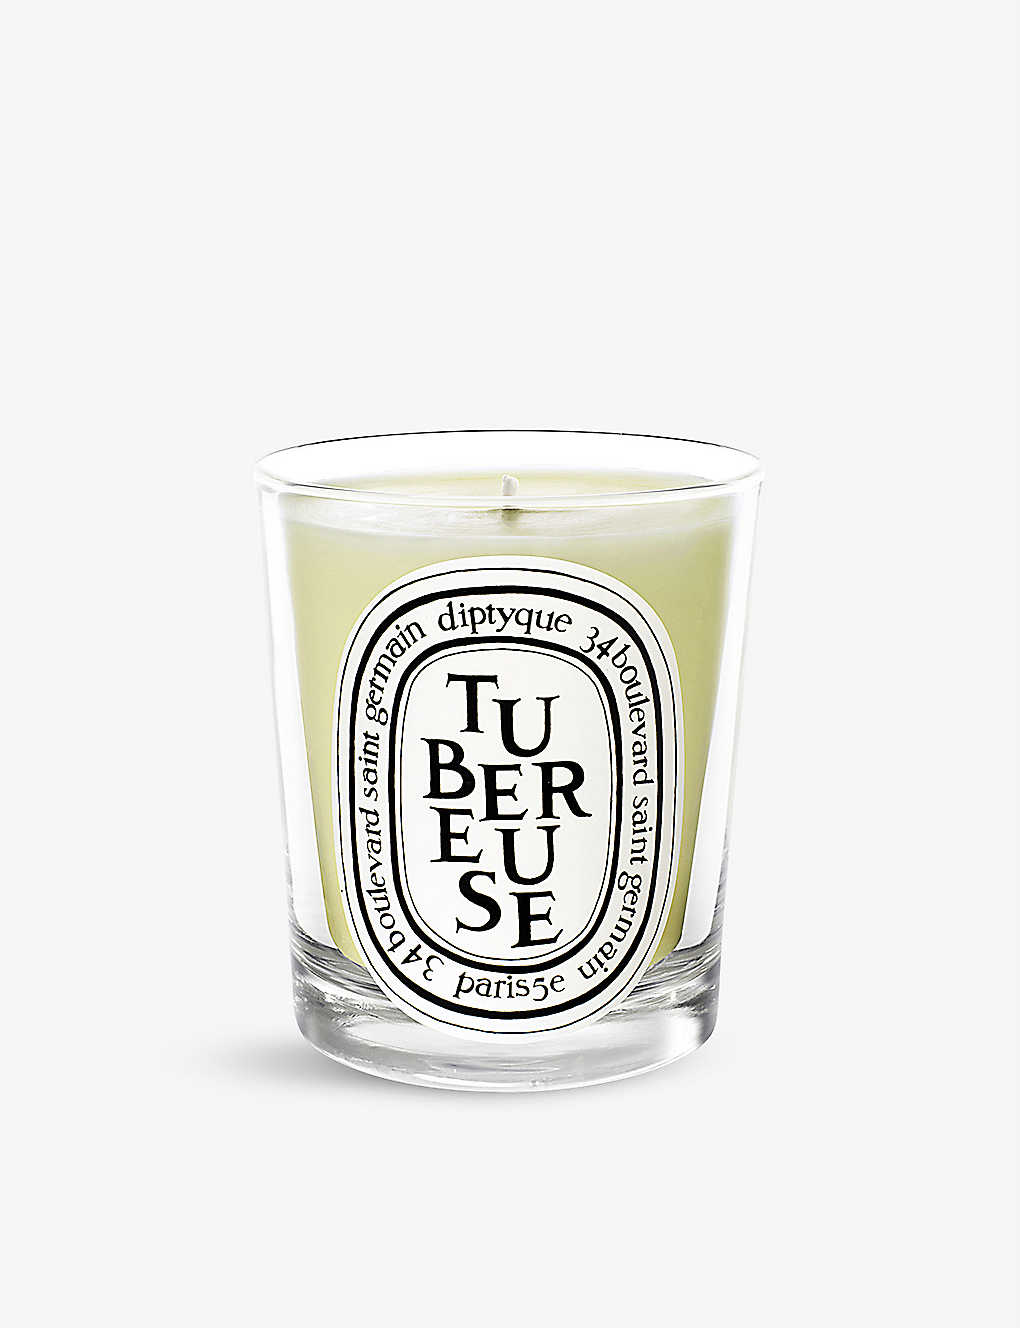 DIPTYQUE - Tubereuse scented candle 190g | Selfridges.com